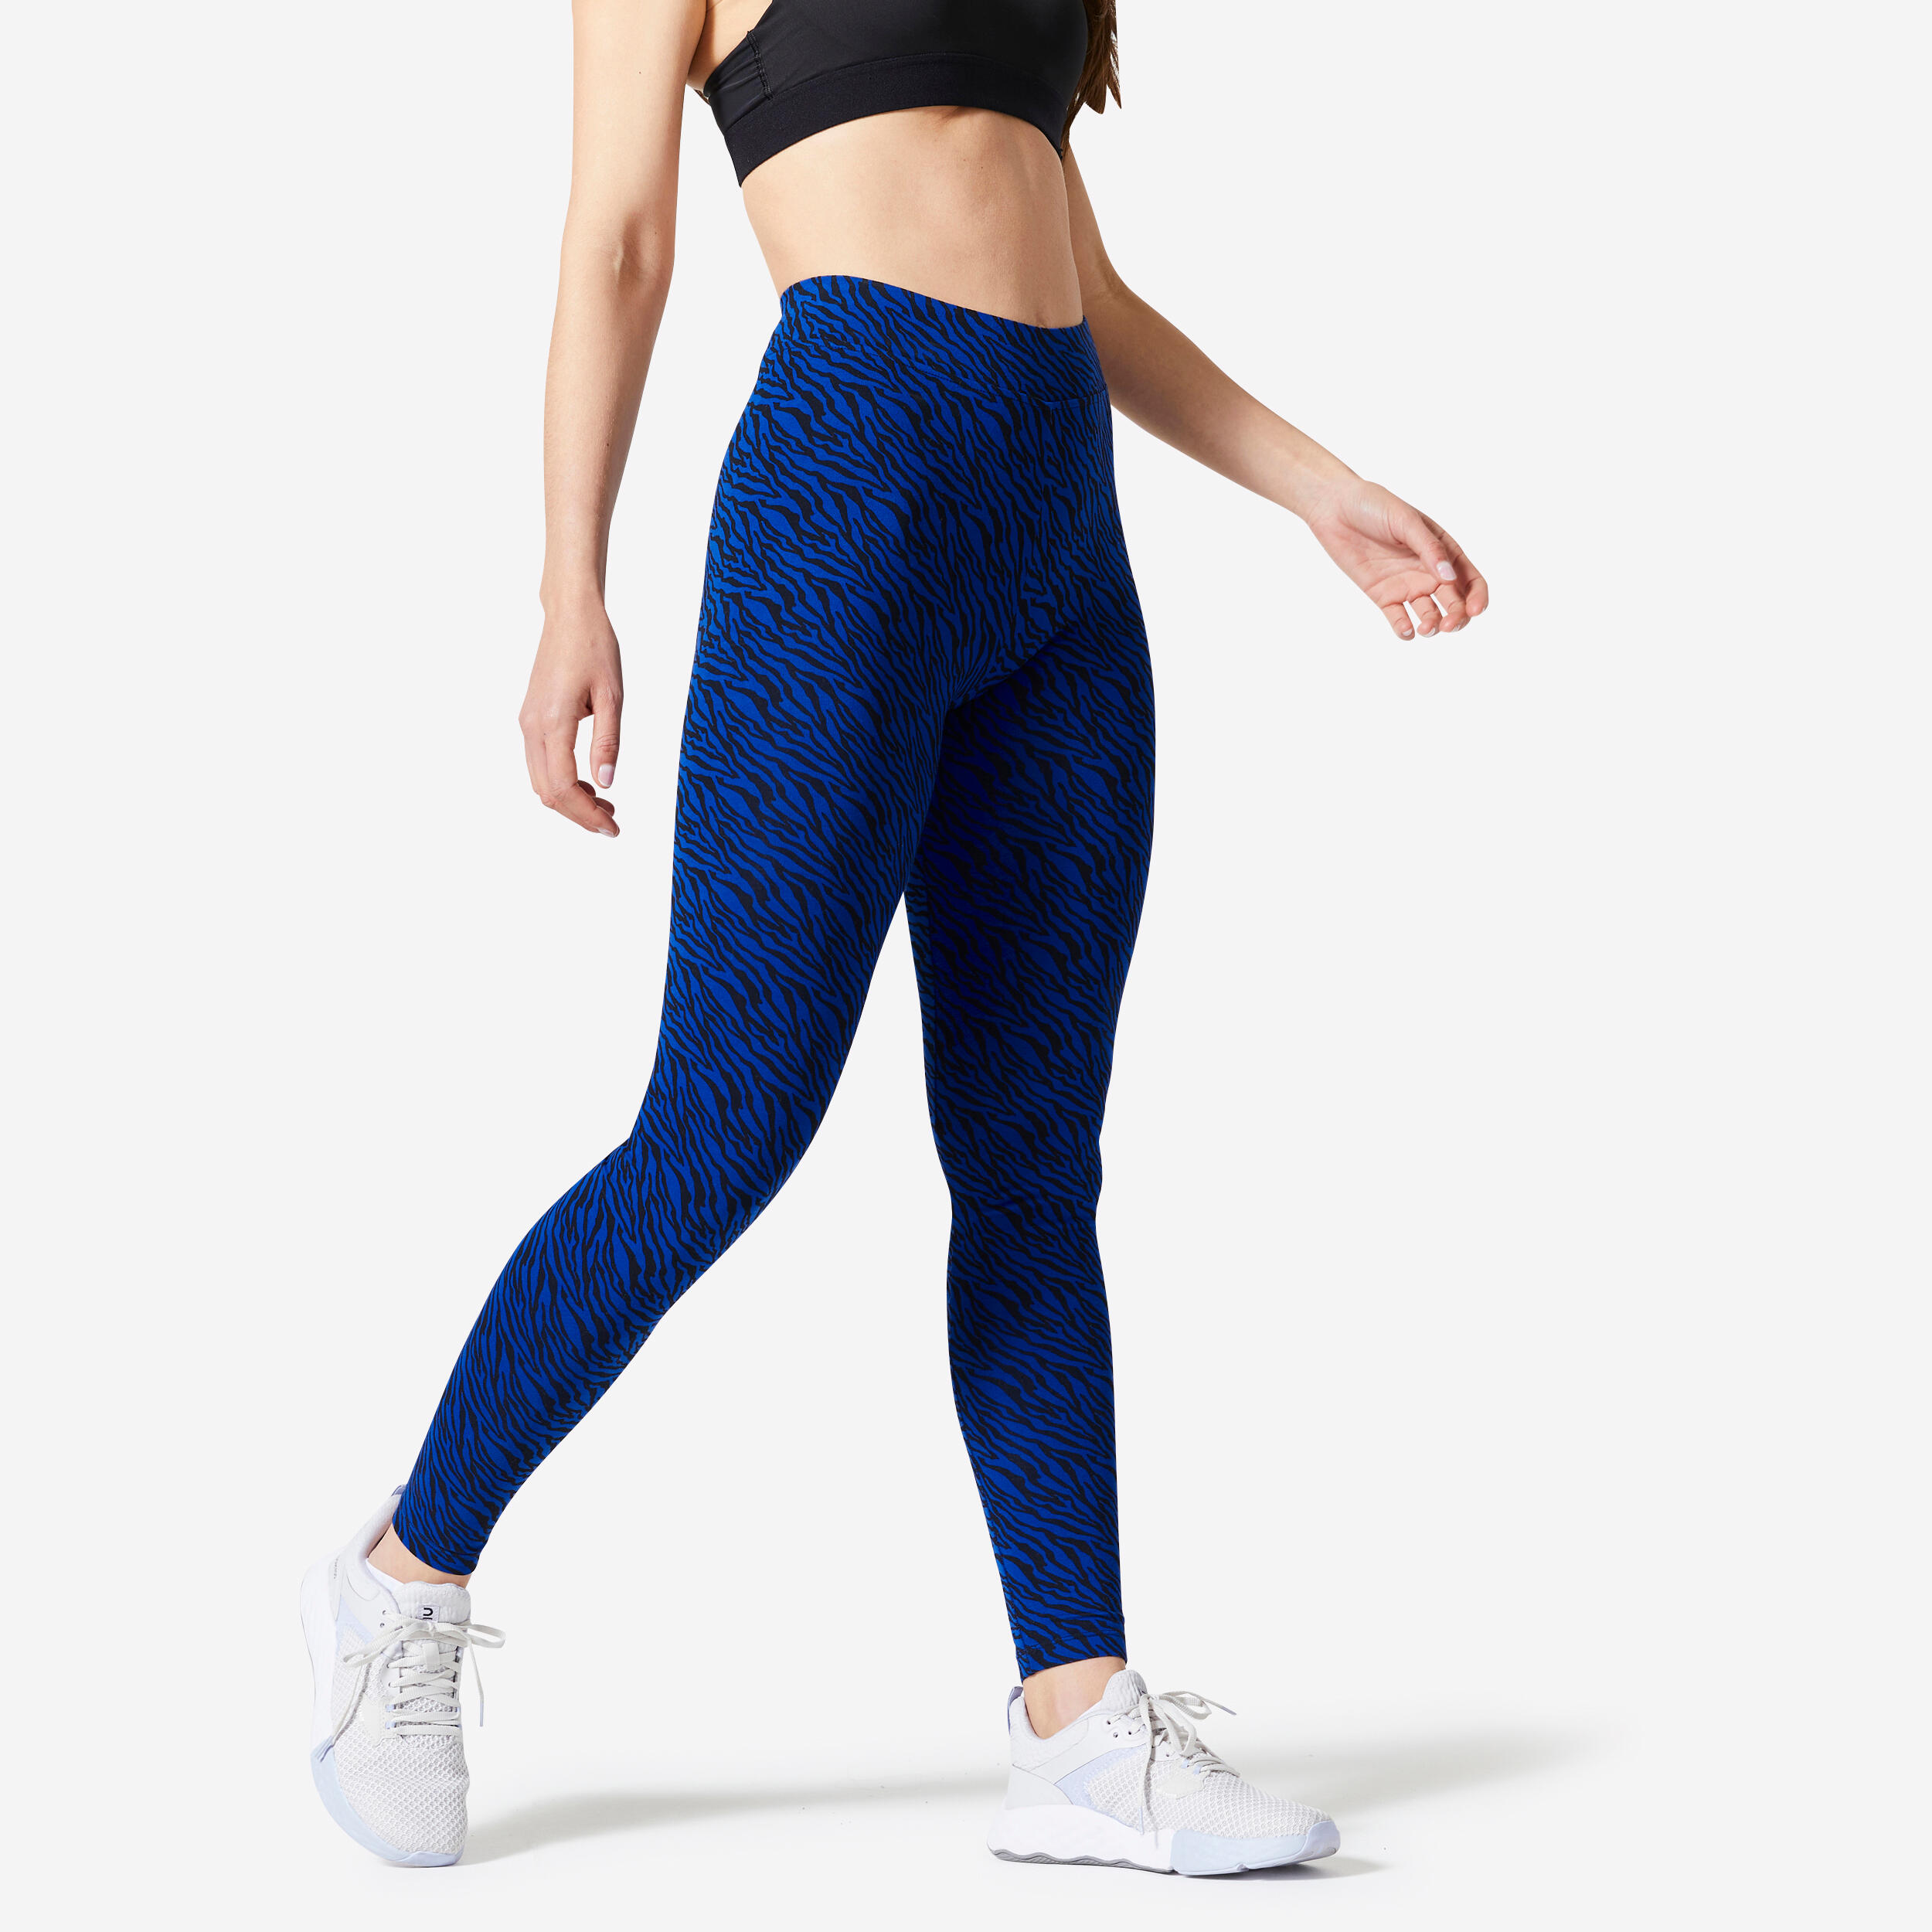 Women's Slim-Fit Fitness Leggings Fit+ 500 - Blue and Black Print 1/5